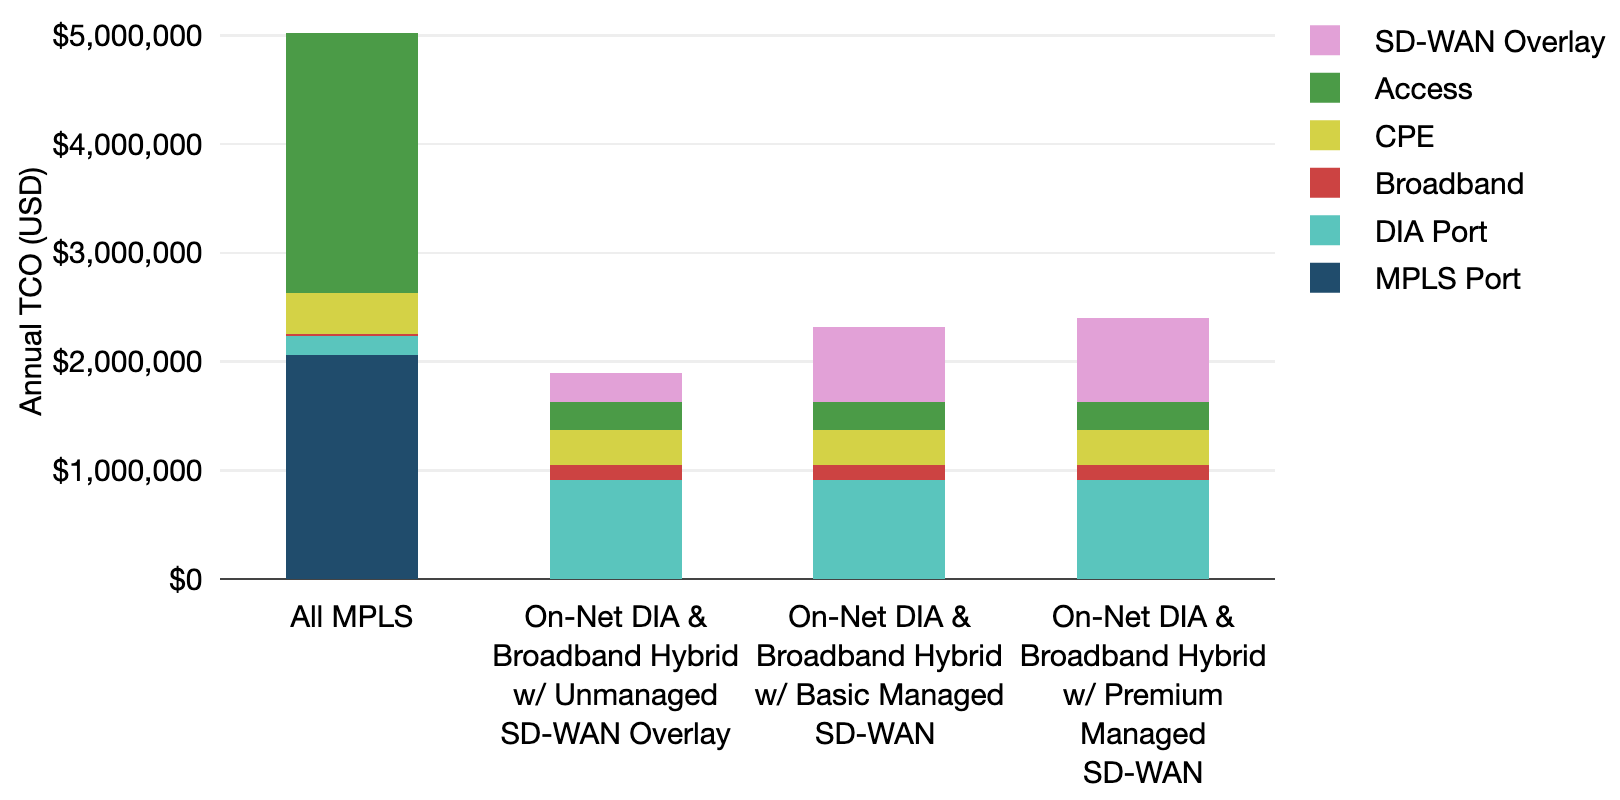 Original MPLS & On-Net DIA Broadband Hybrid WAN with SD-WAN Annual TCO, 2021